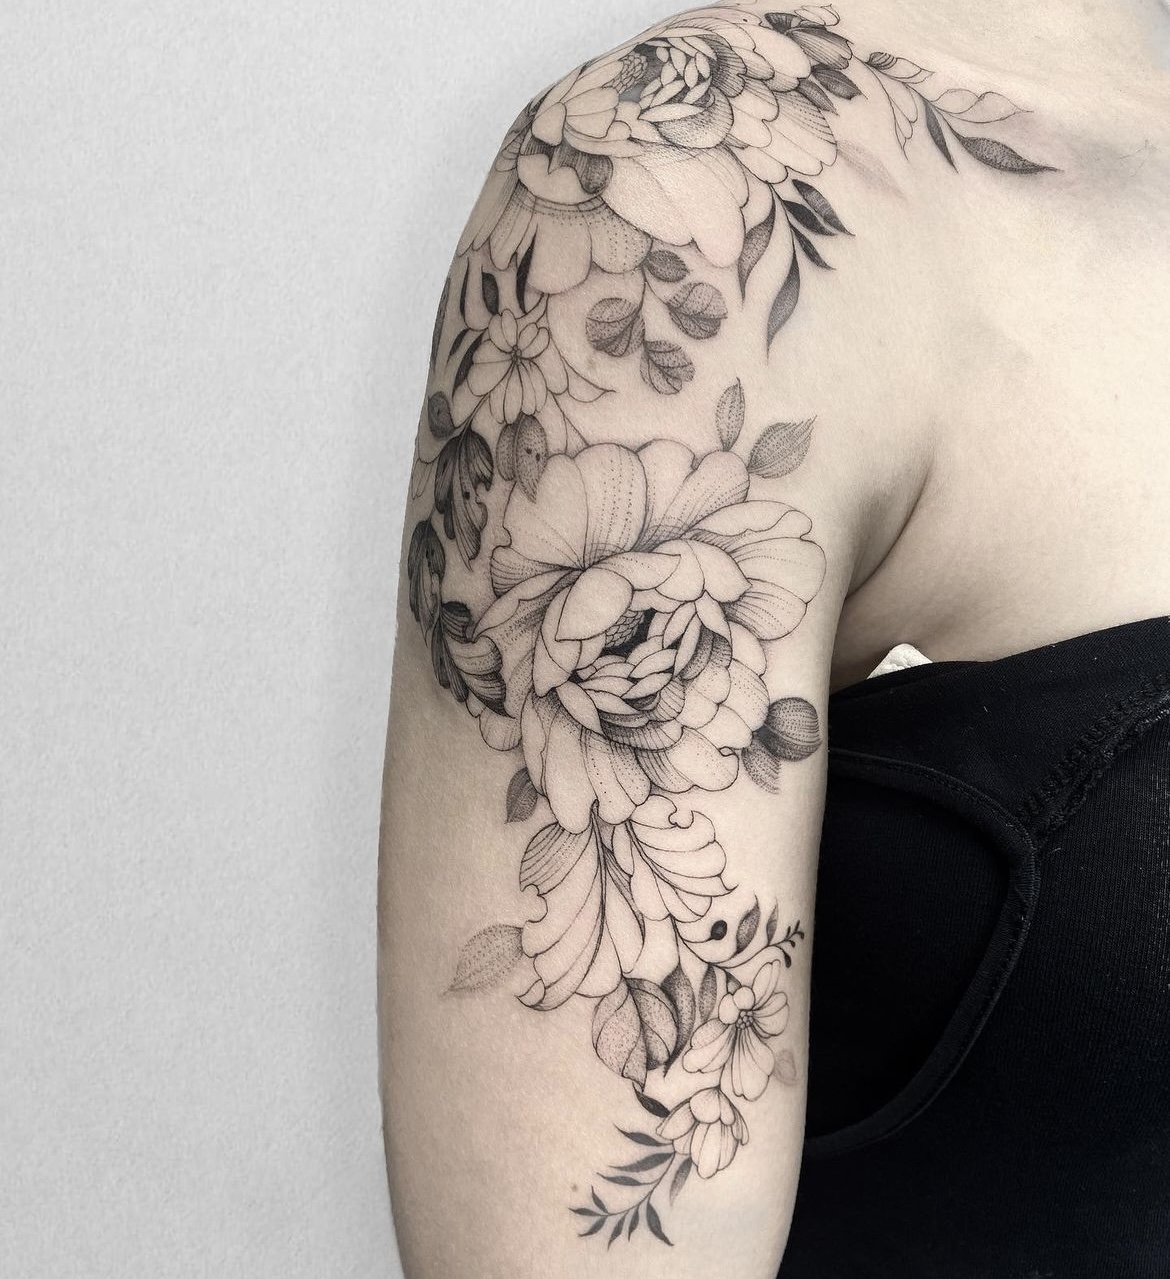 541236 Flower Tattoo Designs Images Stock Photos  Vectors  Shutterstock